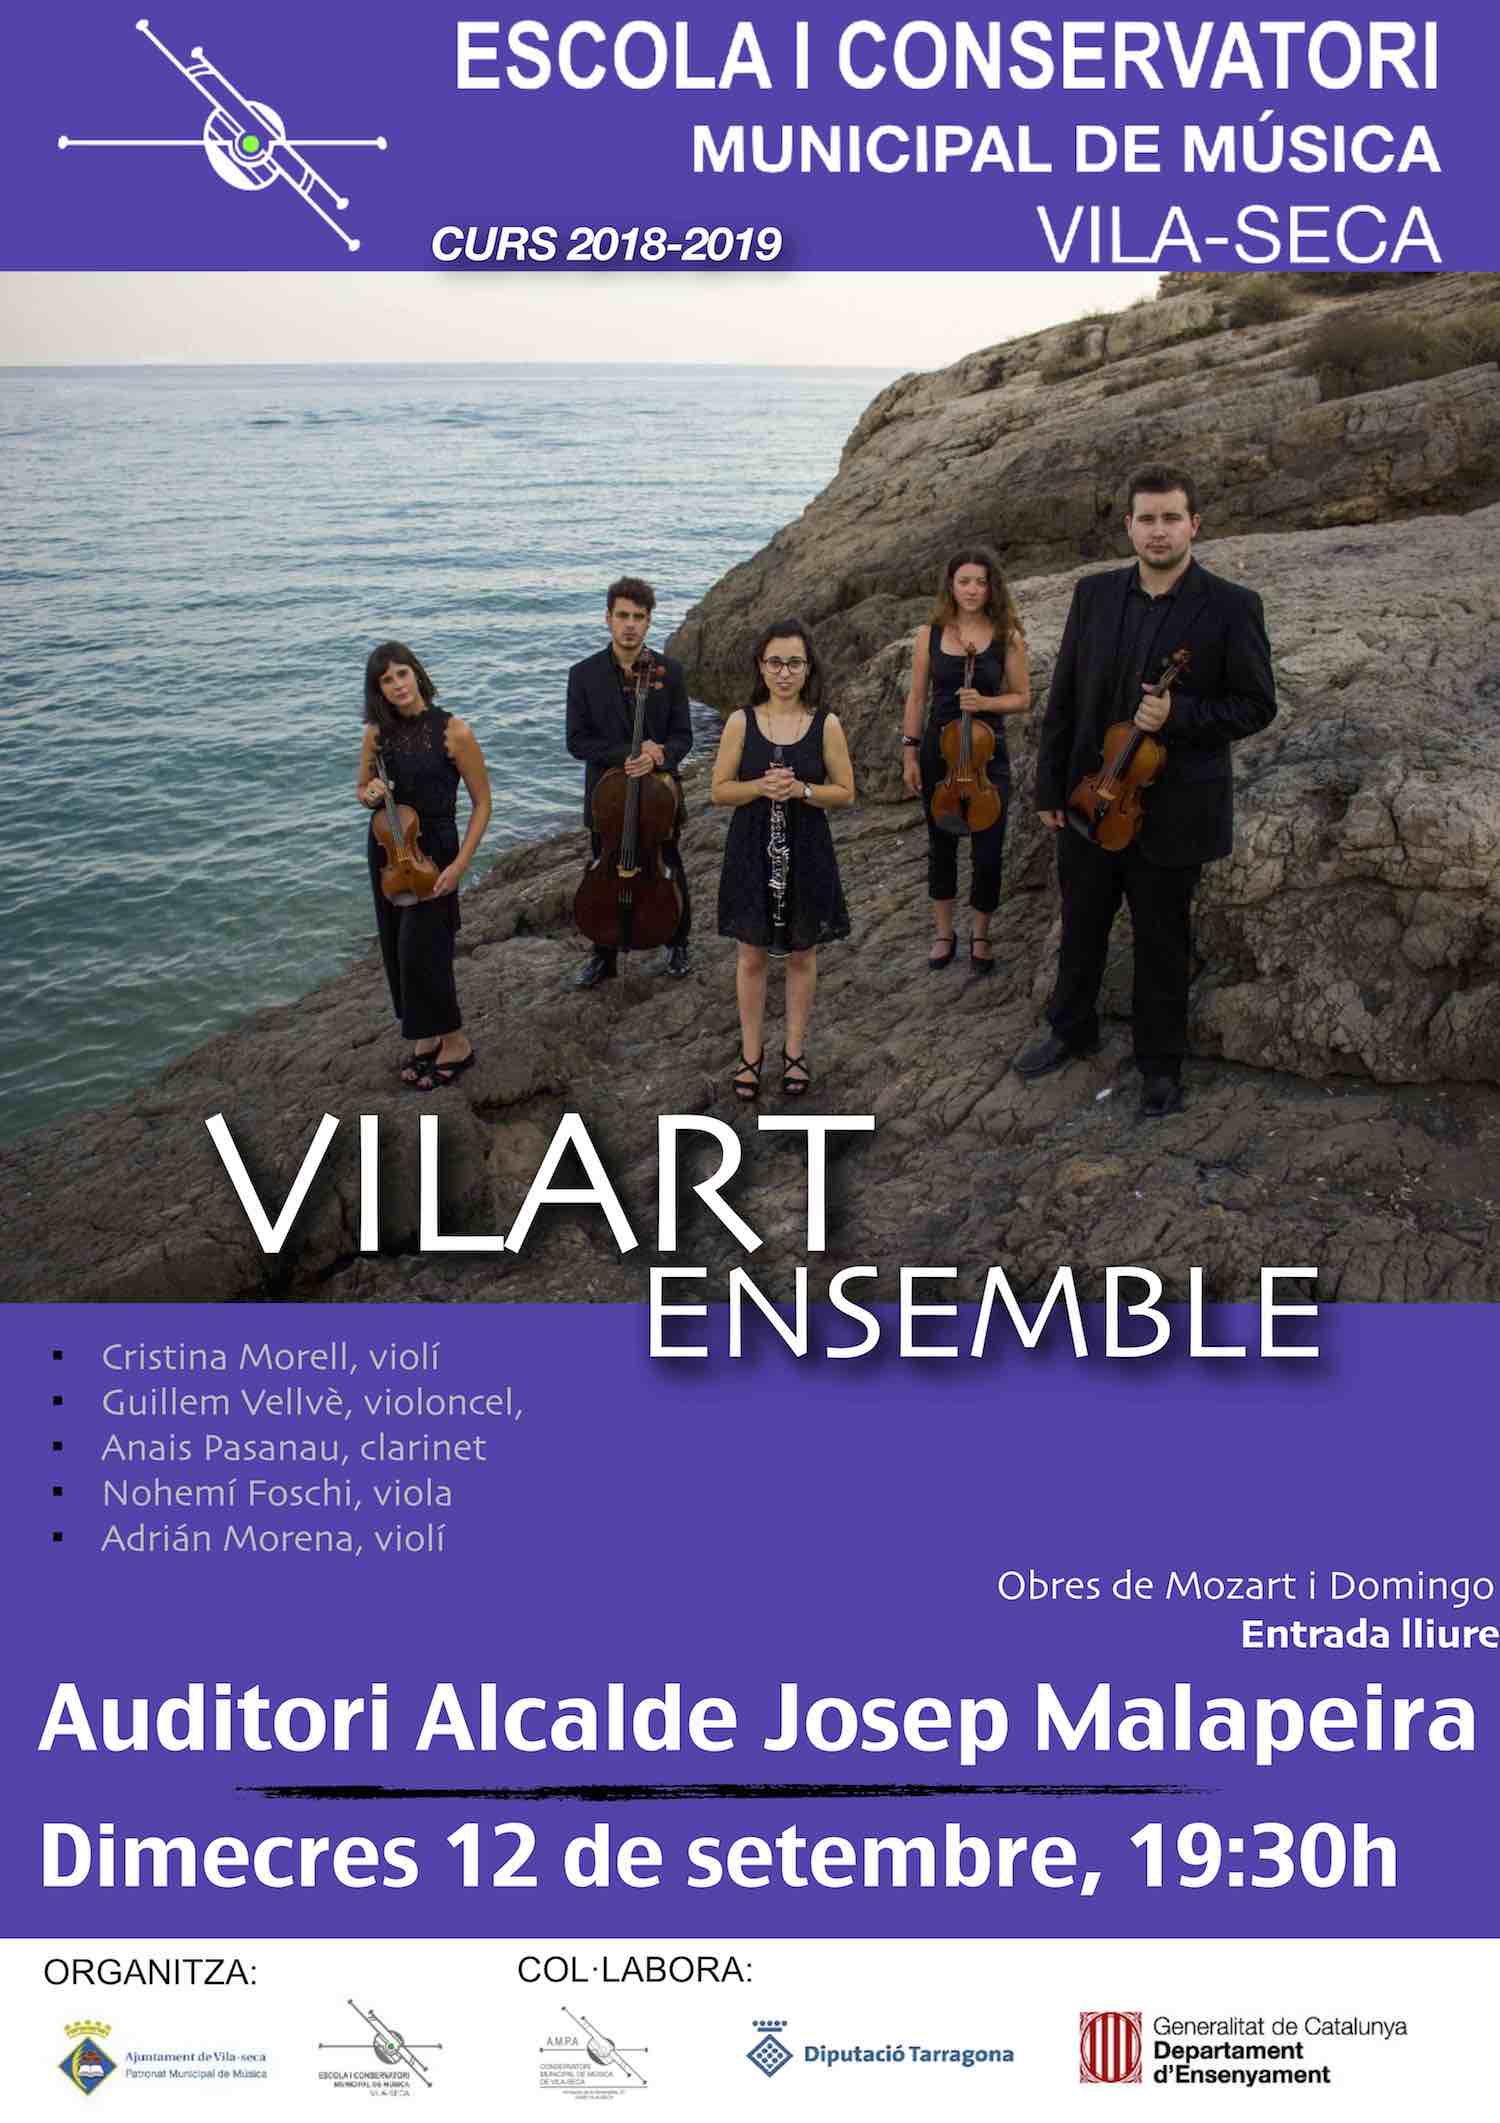 Concert de Vilart Ensemble a l'Auditori Alcalde Josep Malapeira